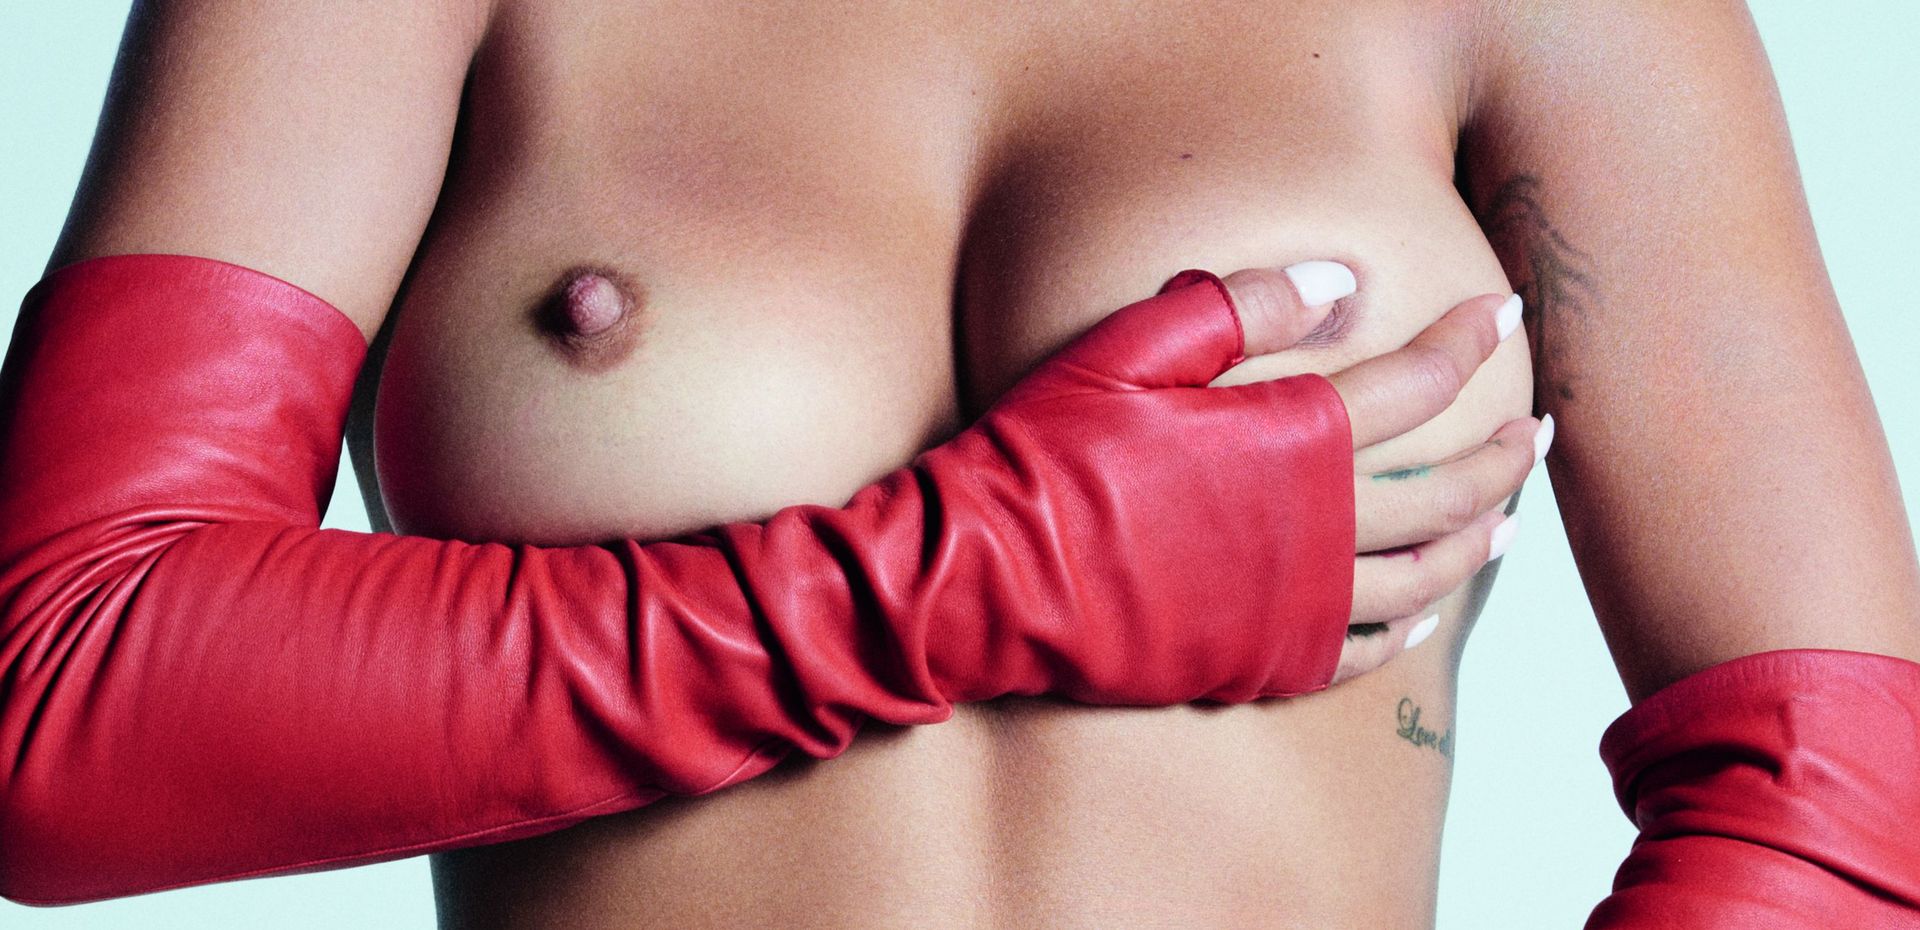 Check out Rita Ora’s nude. leaked photo by Matt Easton for Clash magazine (...